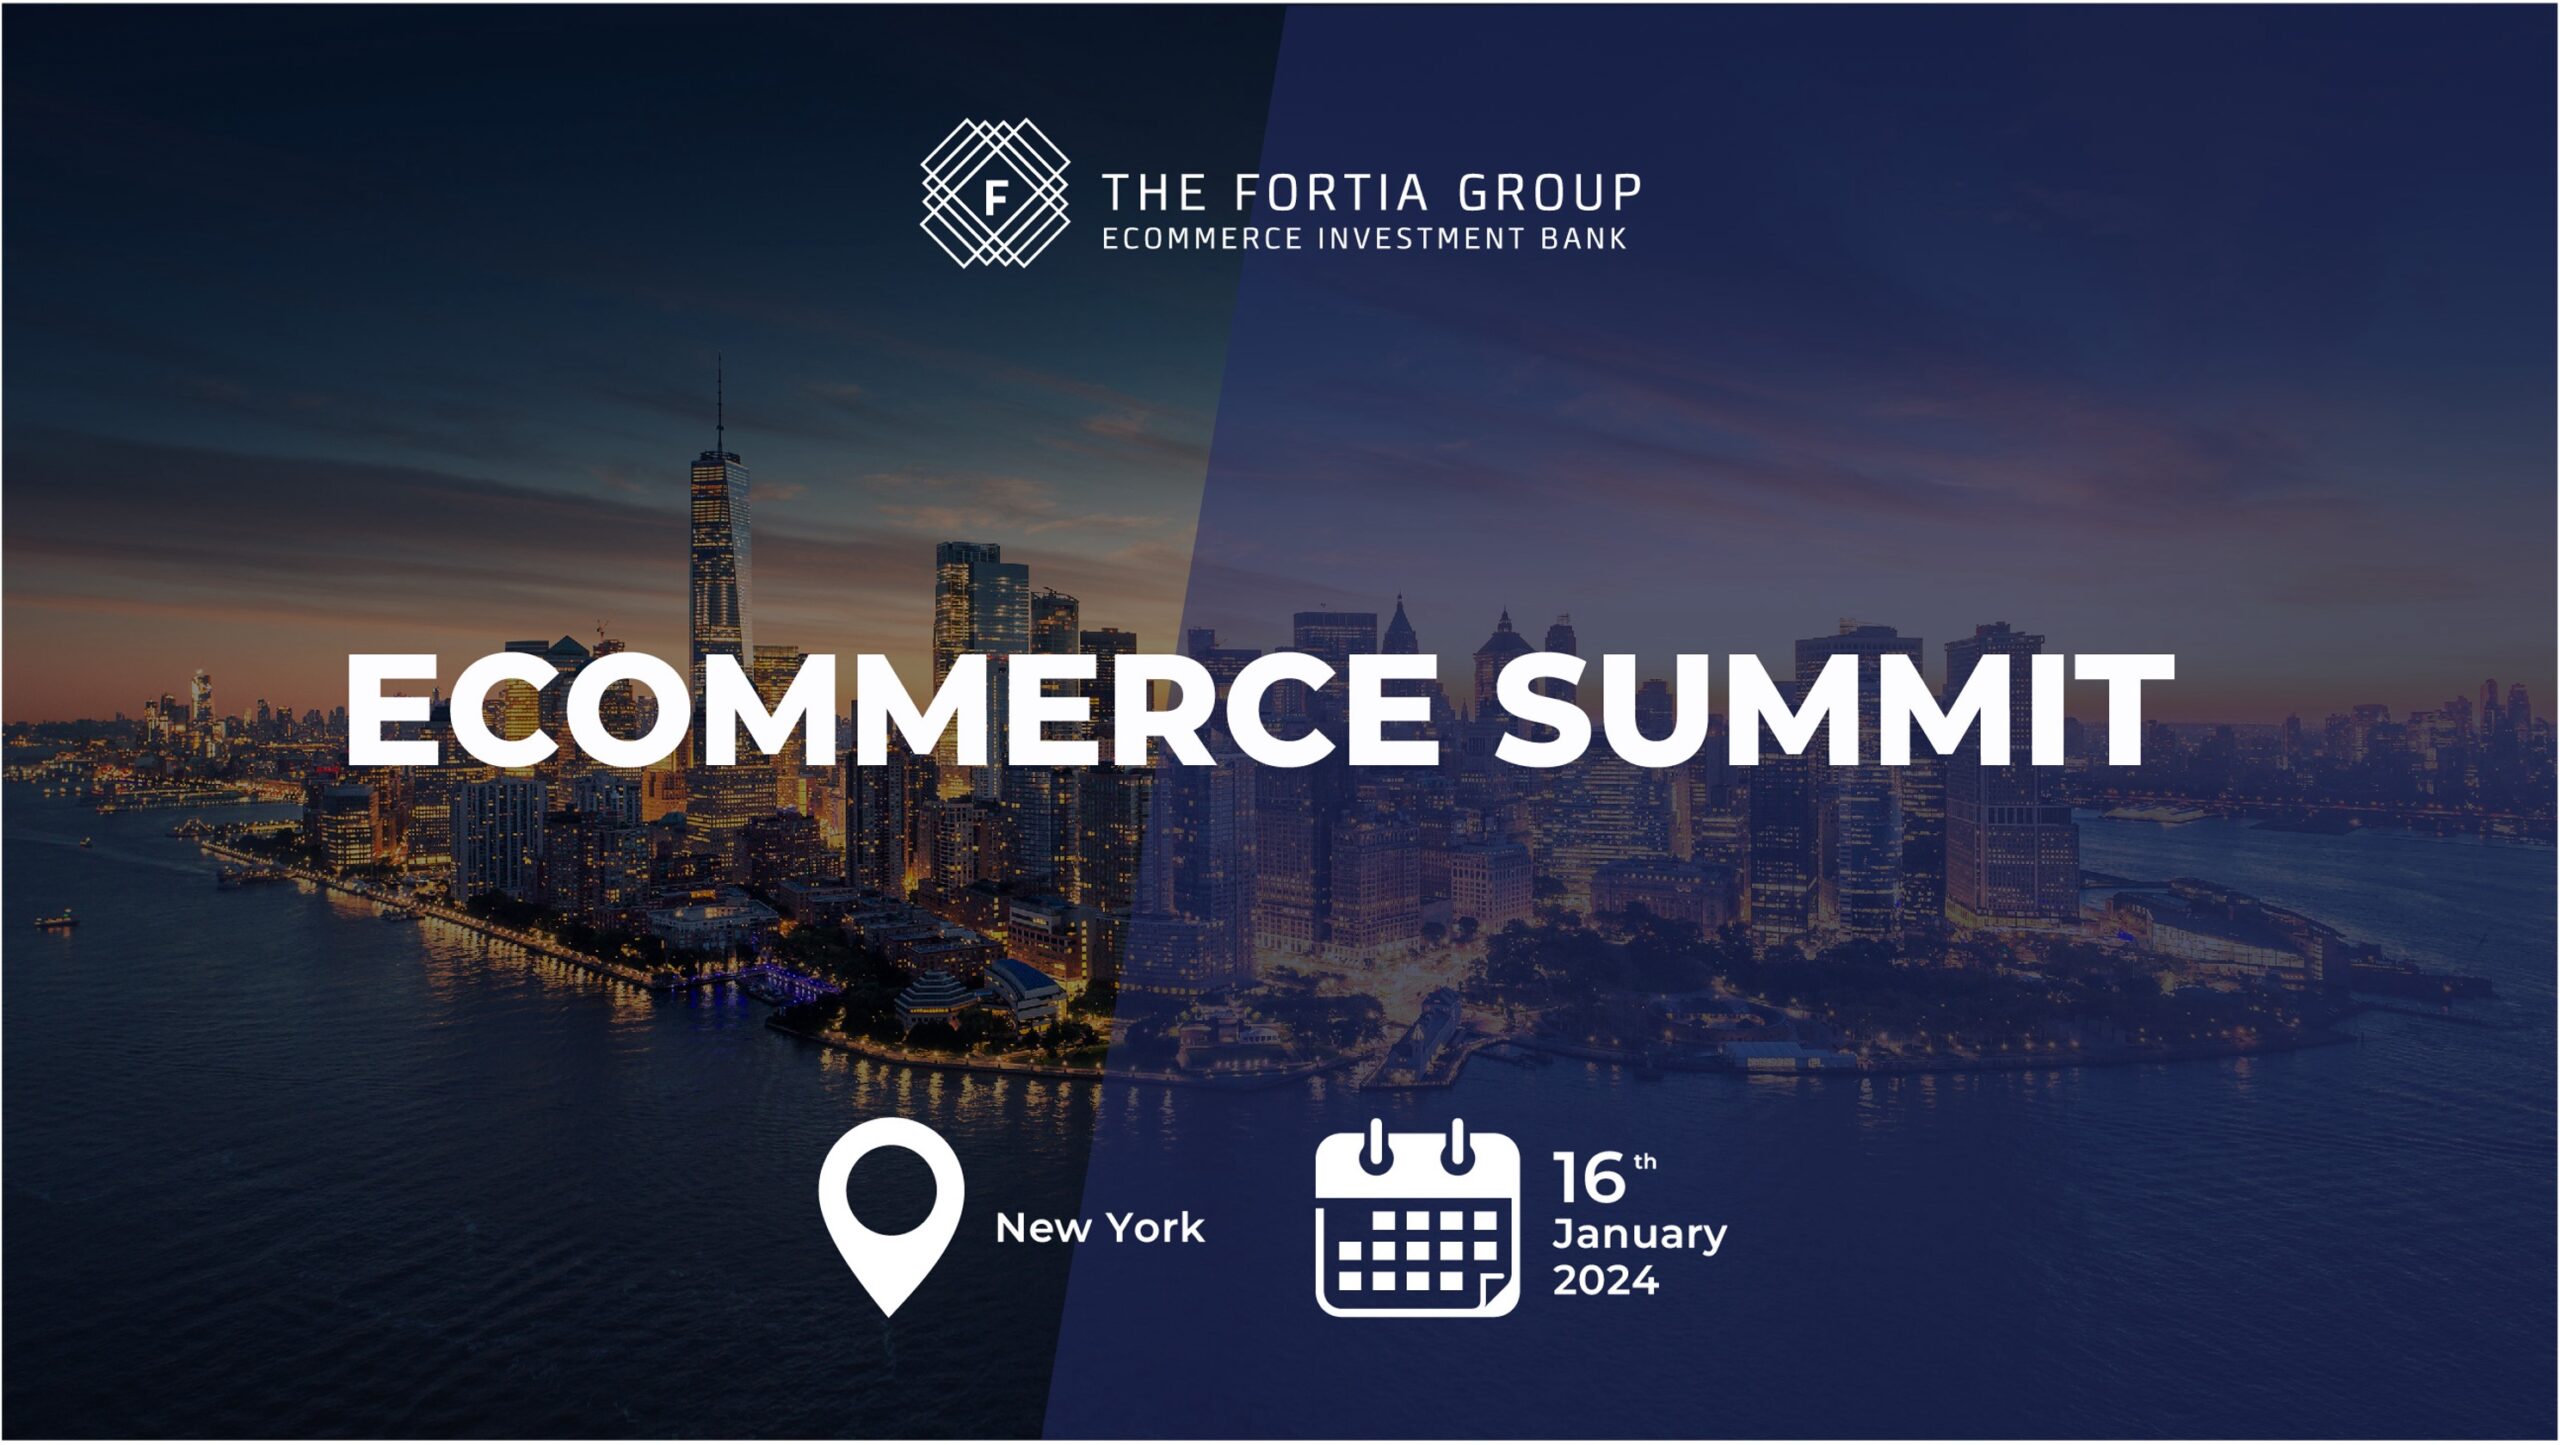 eCommerce Summit